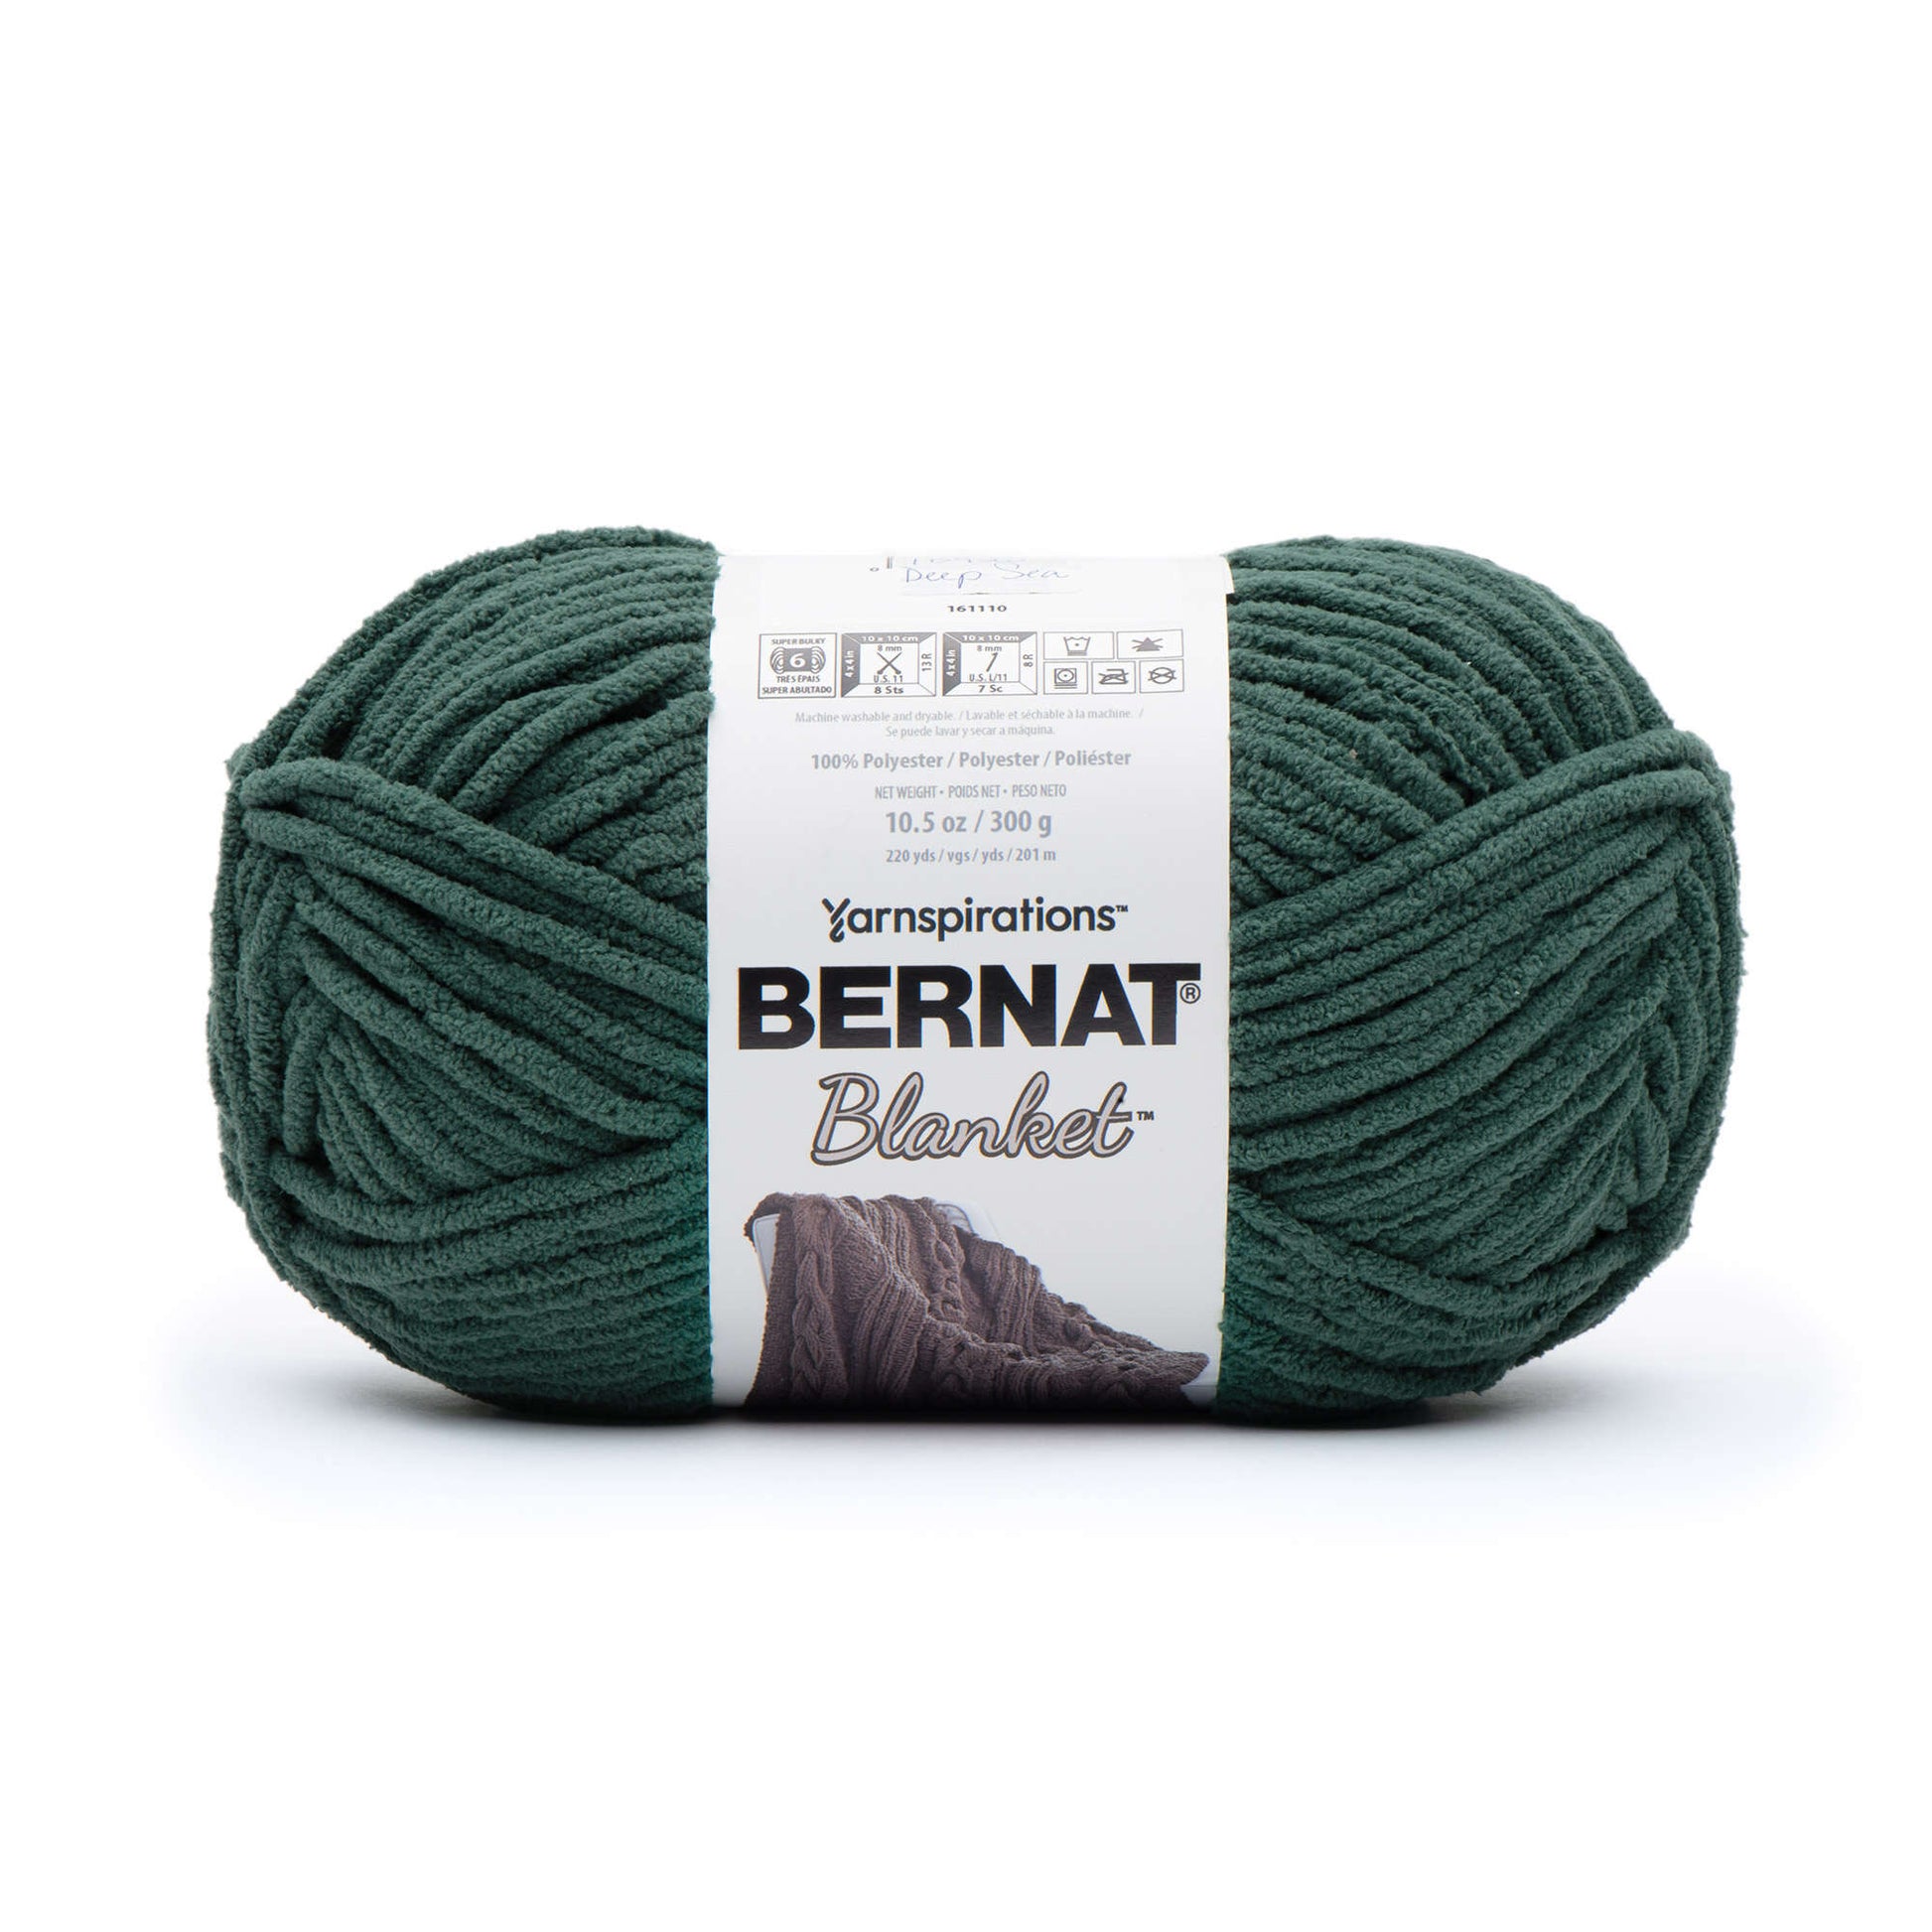 Bernat Blanket 6 Super Bulky Polyester Yarn, Countryside 10.5oz/300g, 220  Yards 